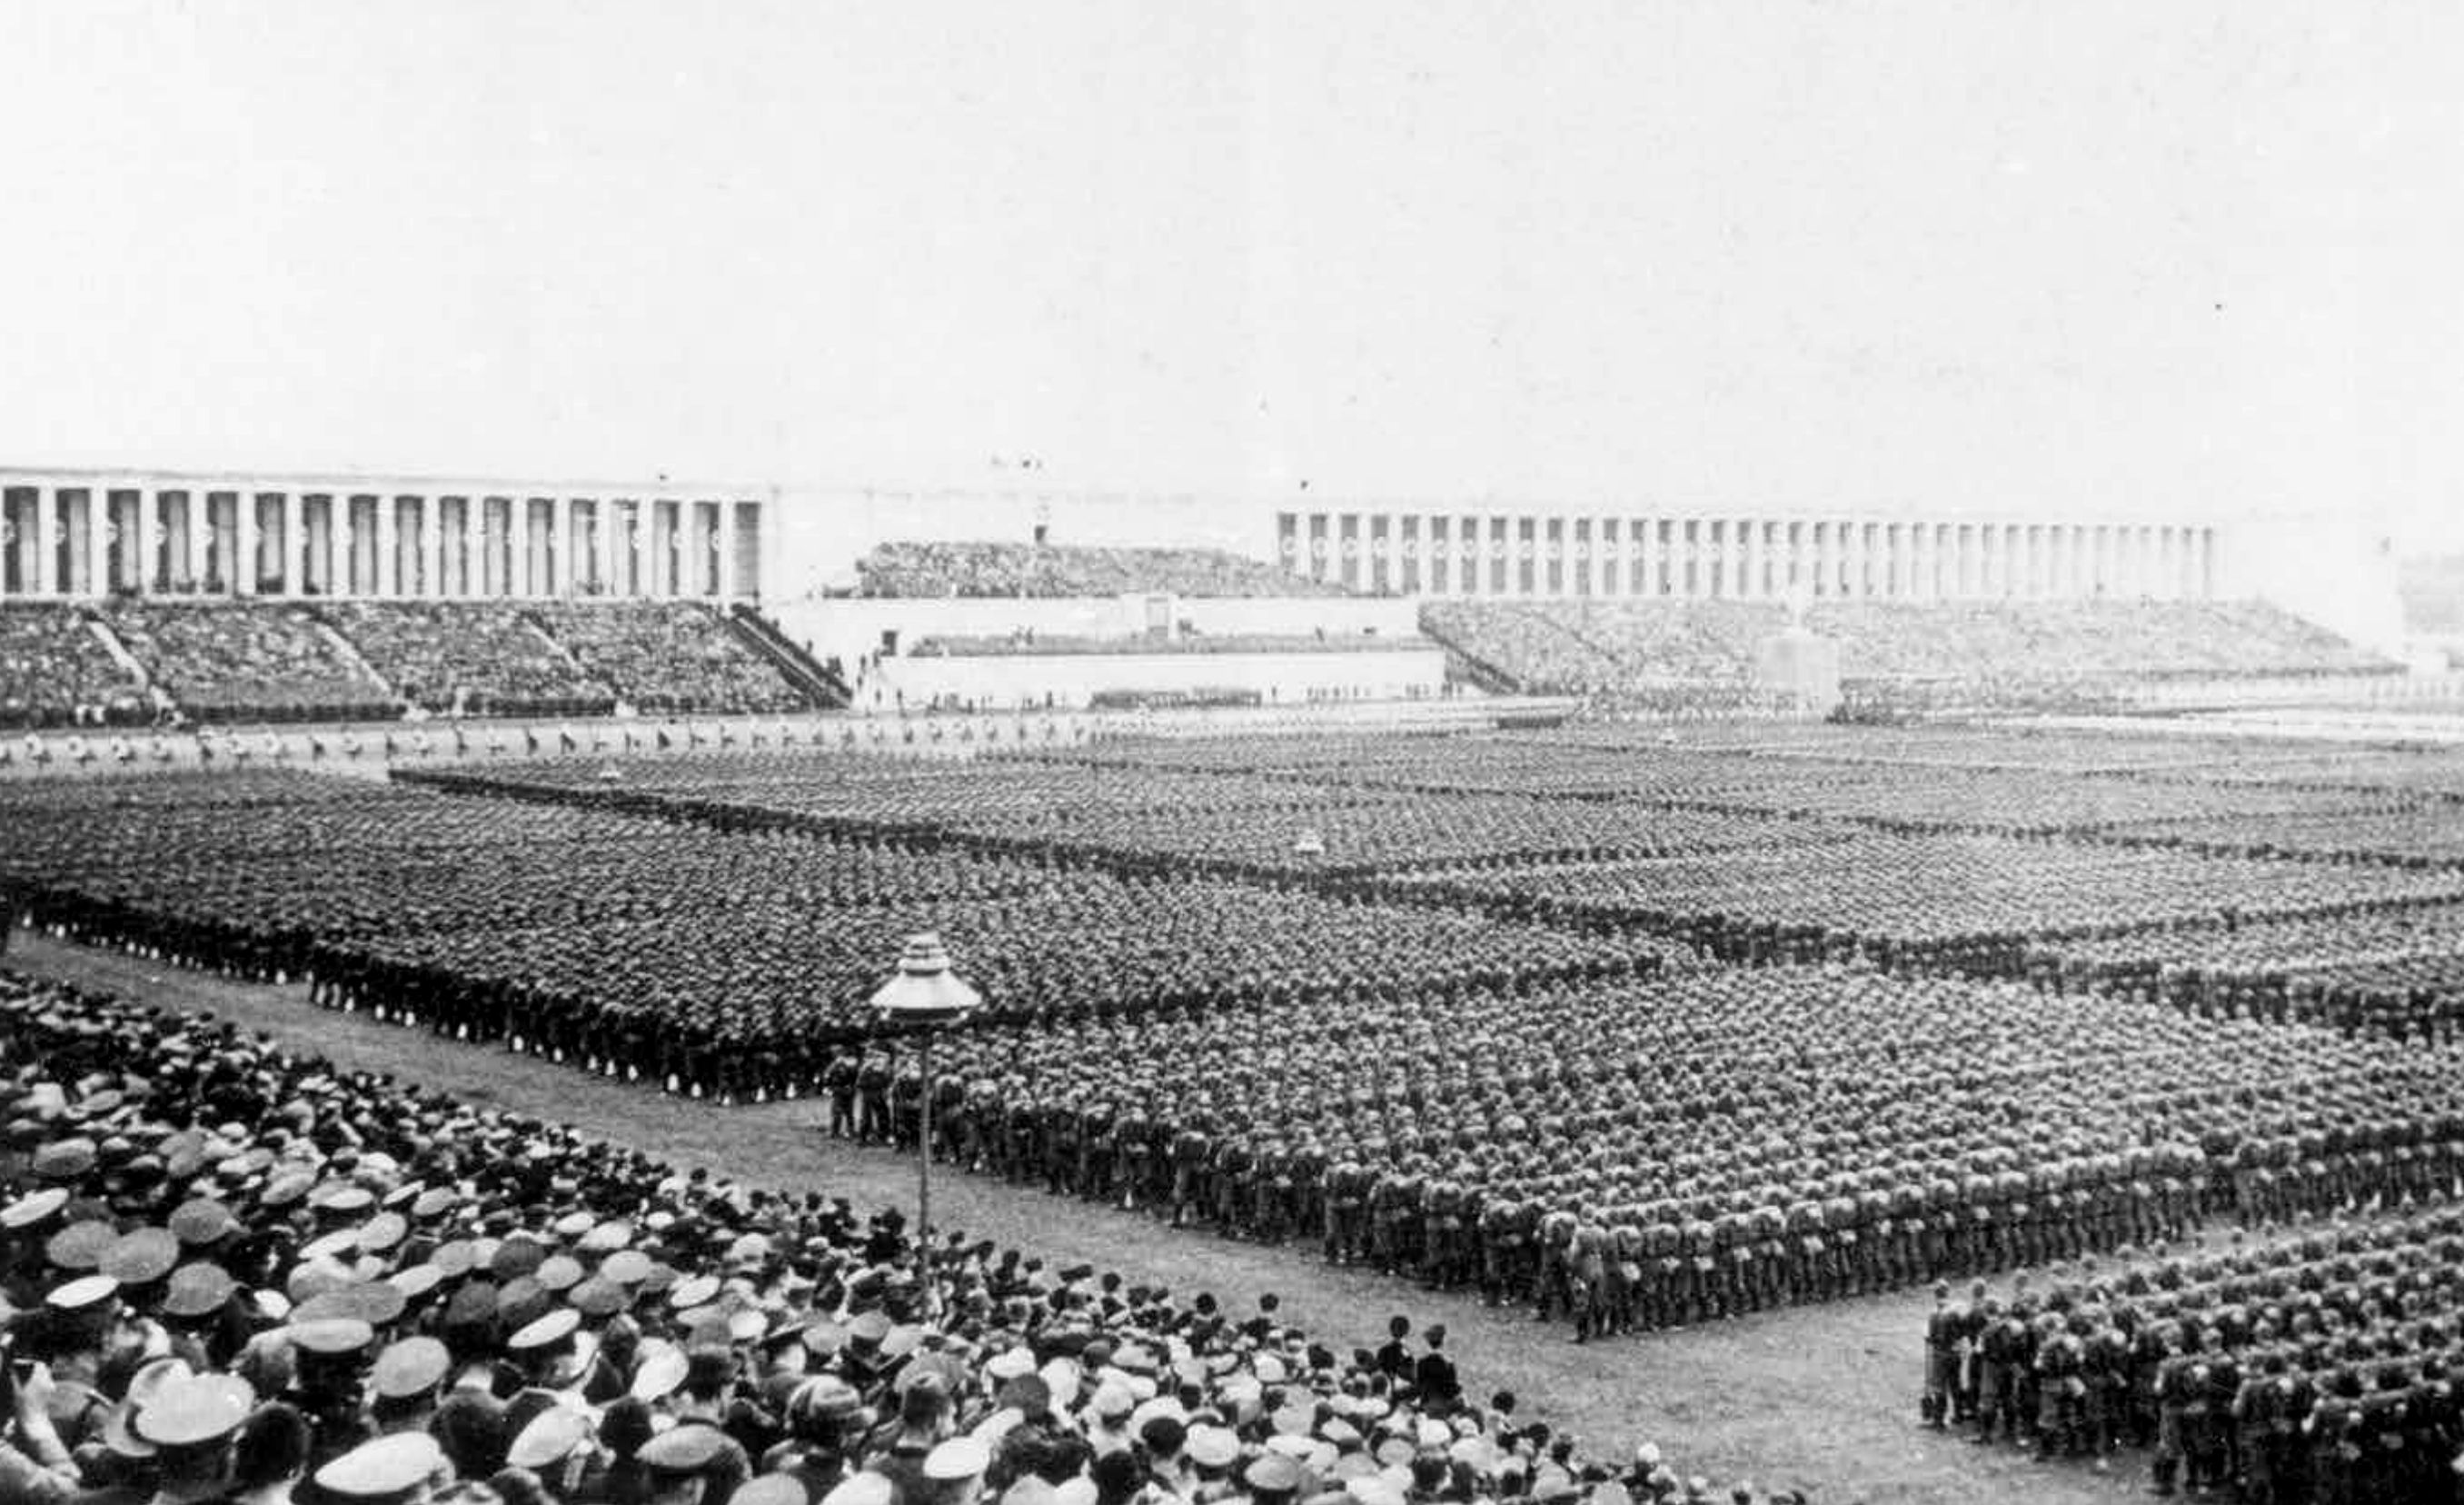 1936-zeppelin-field-nuremberg-rally-nazi